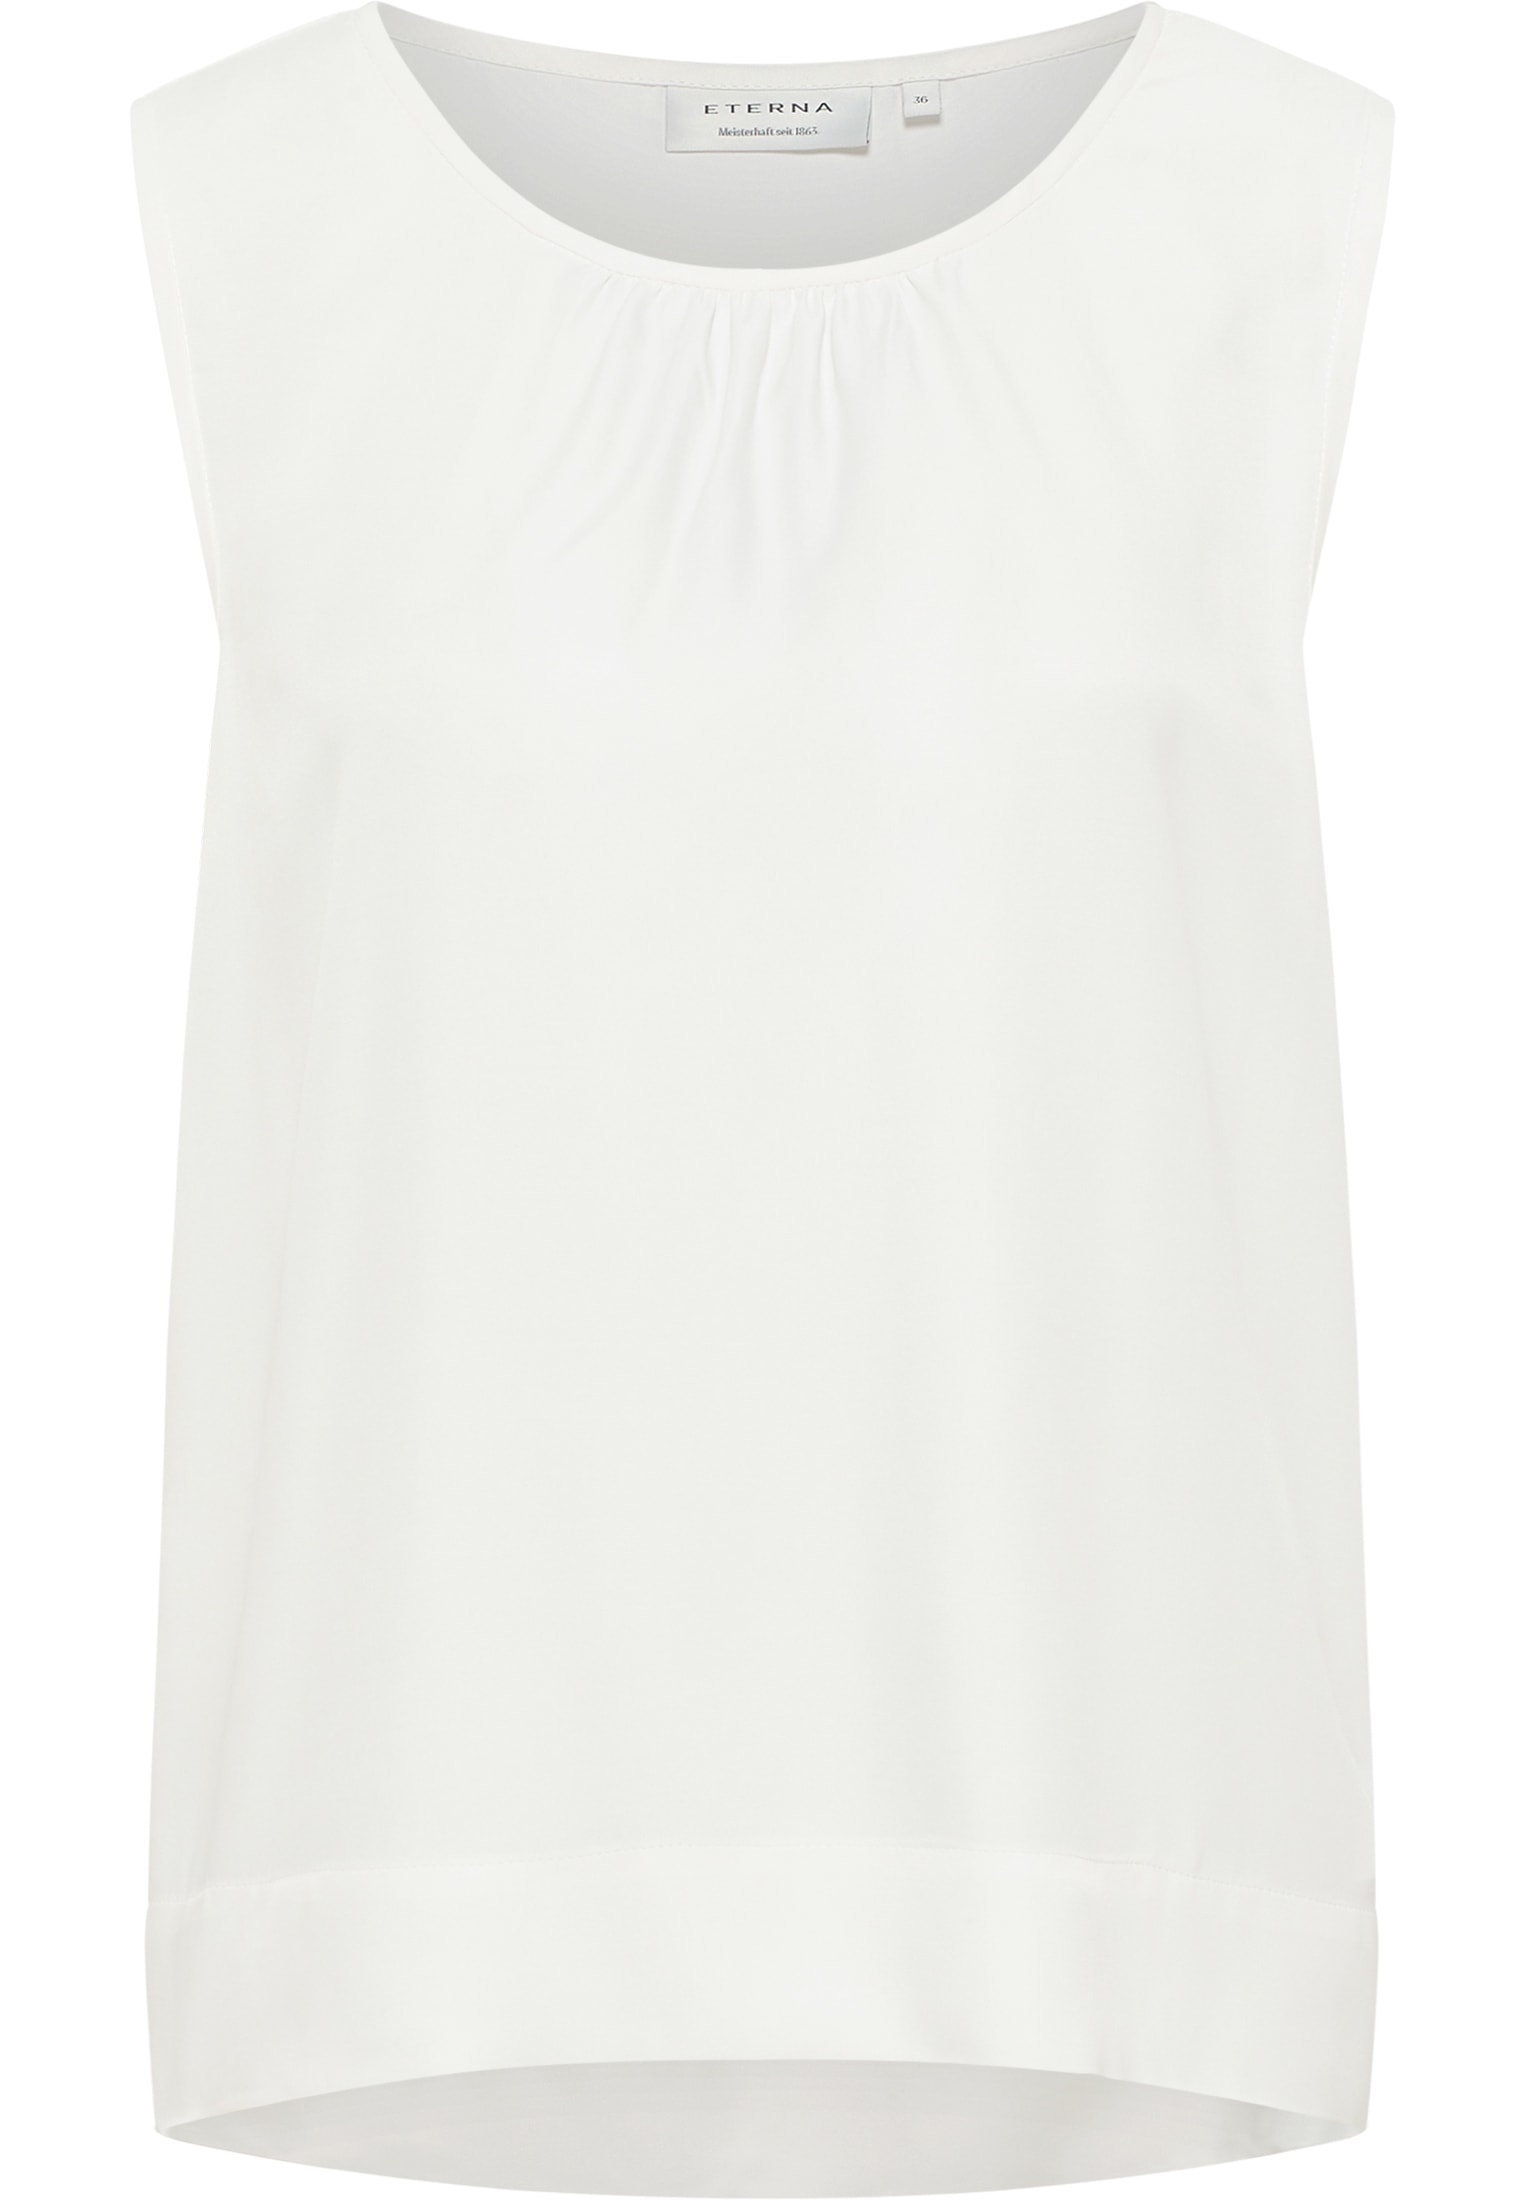 Shirt in | 2BL04345-00-02-36-sl Arm off-white 36 | Viscose Bluse | unifarben | off-white ohne